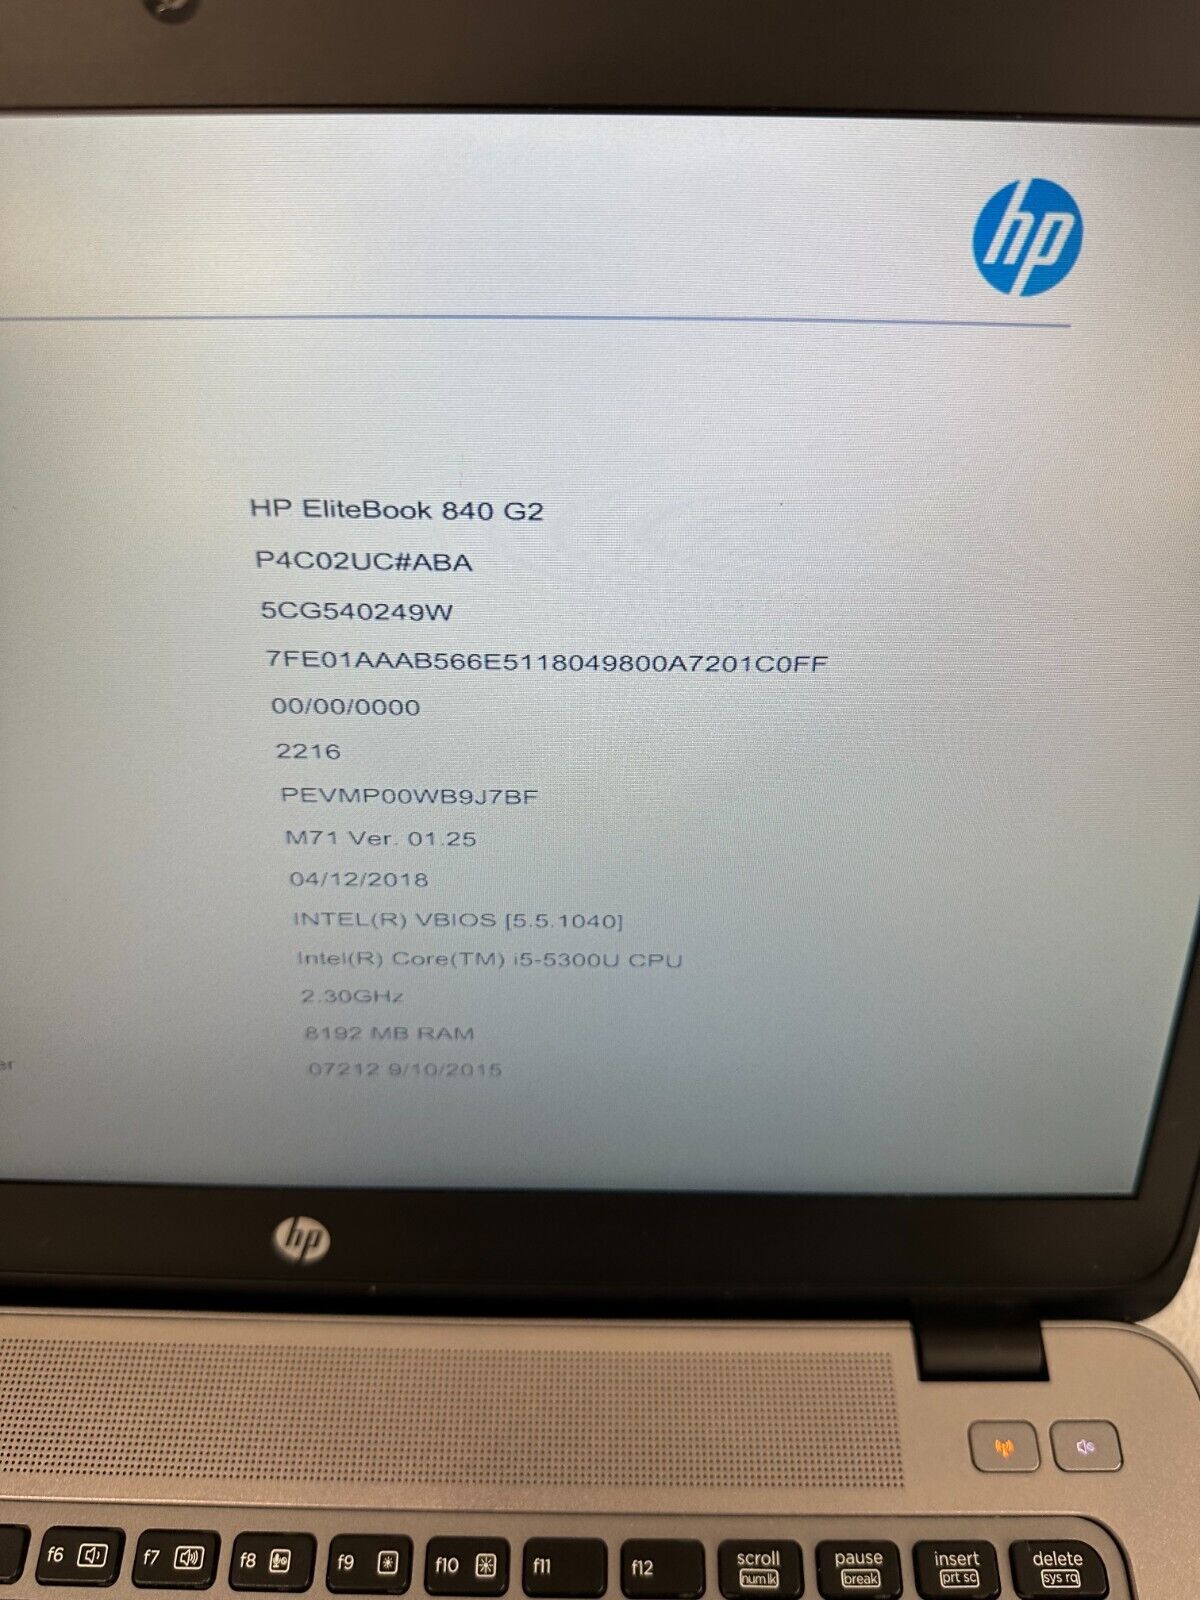 LOT of 15 HP EliteBook 840 G2 i5 5th Gen 2.30GHz 8GB RAM (READ) QTY AVAIL